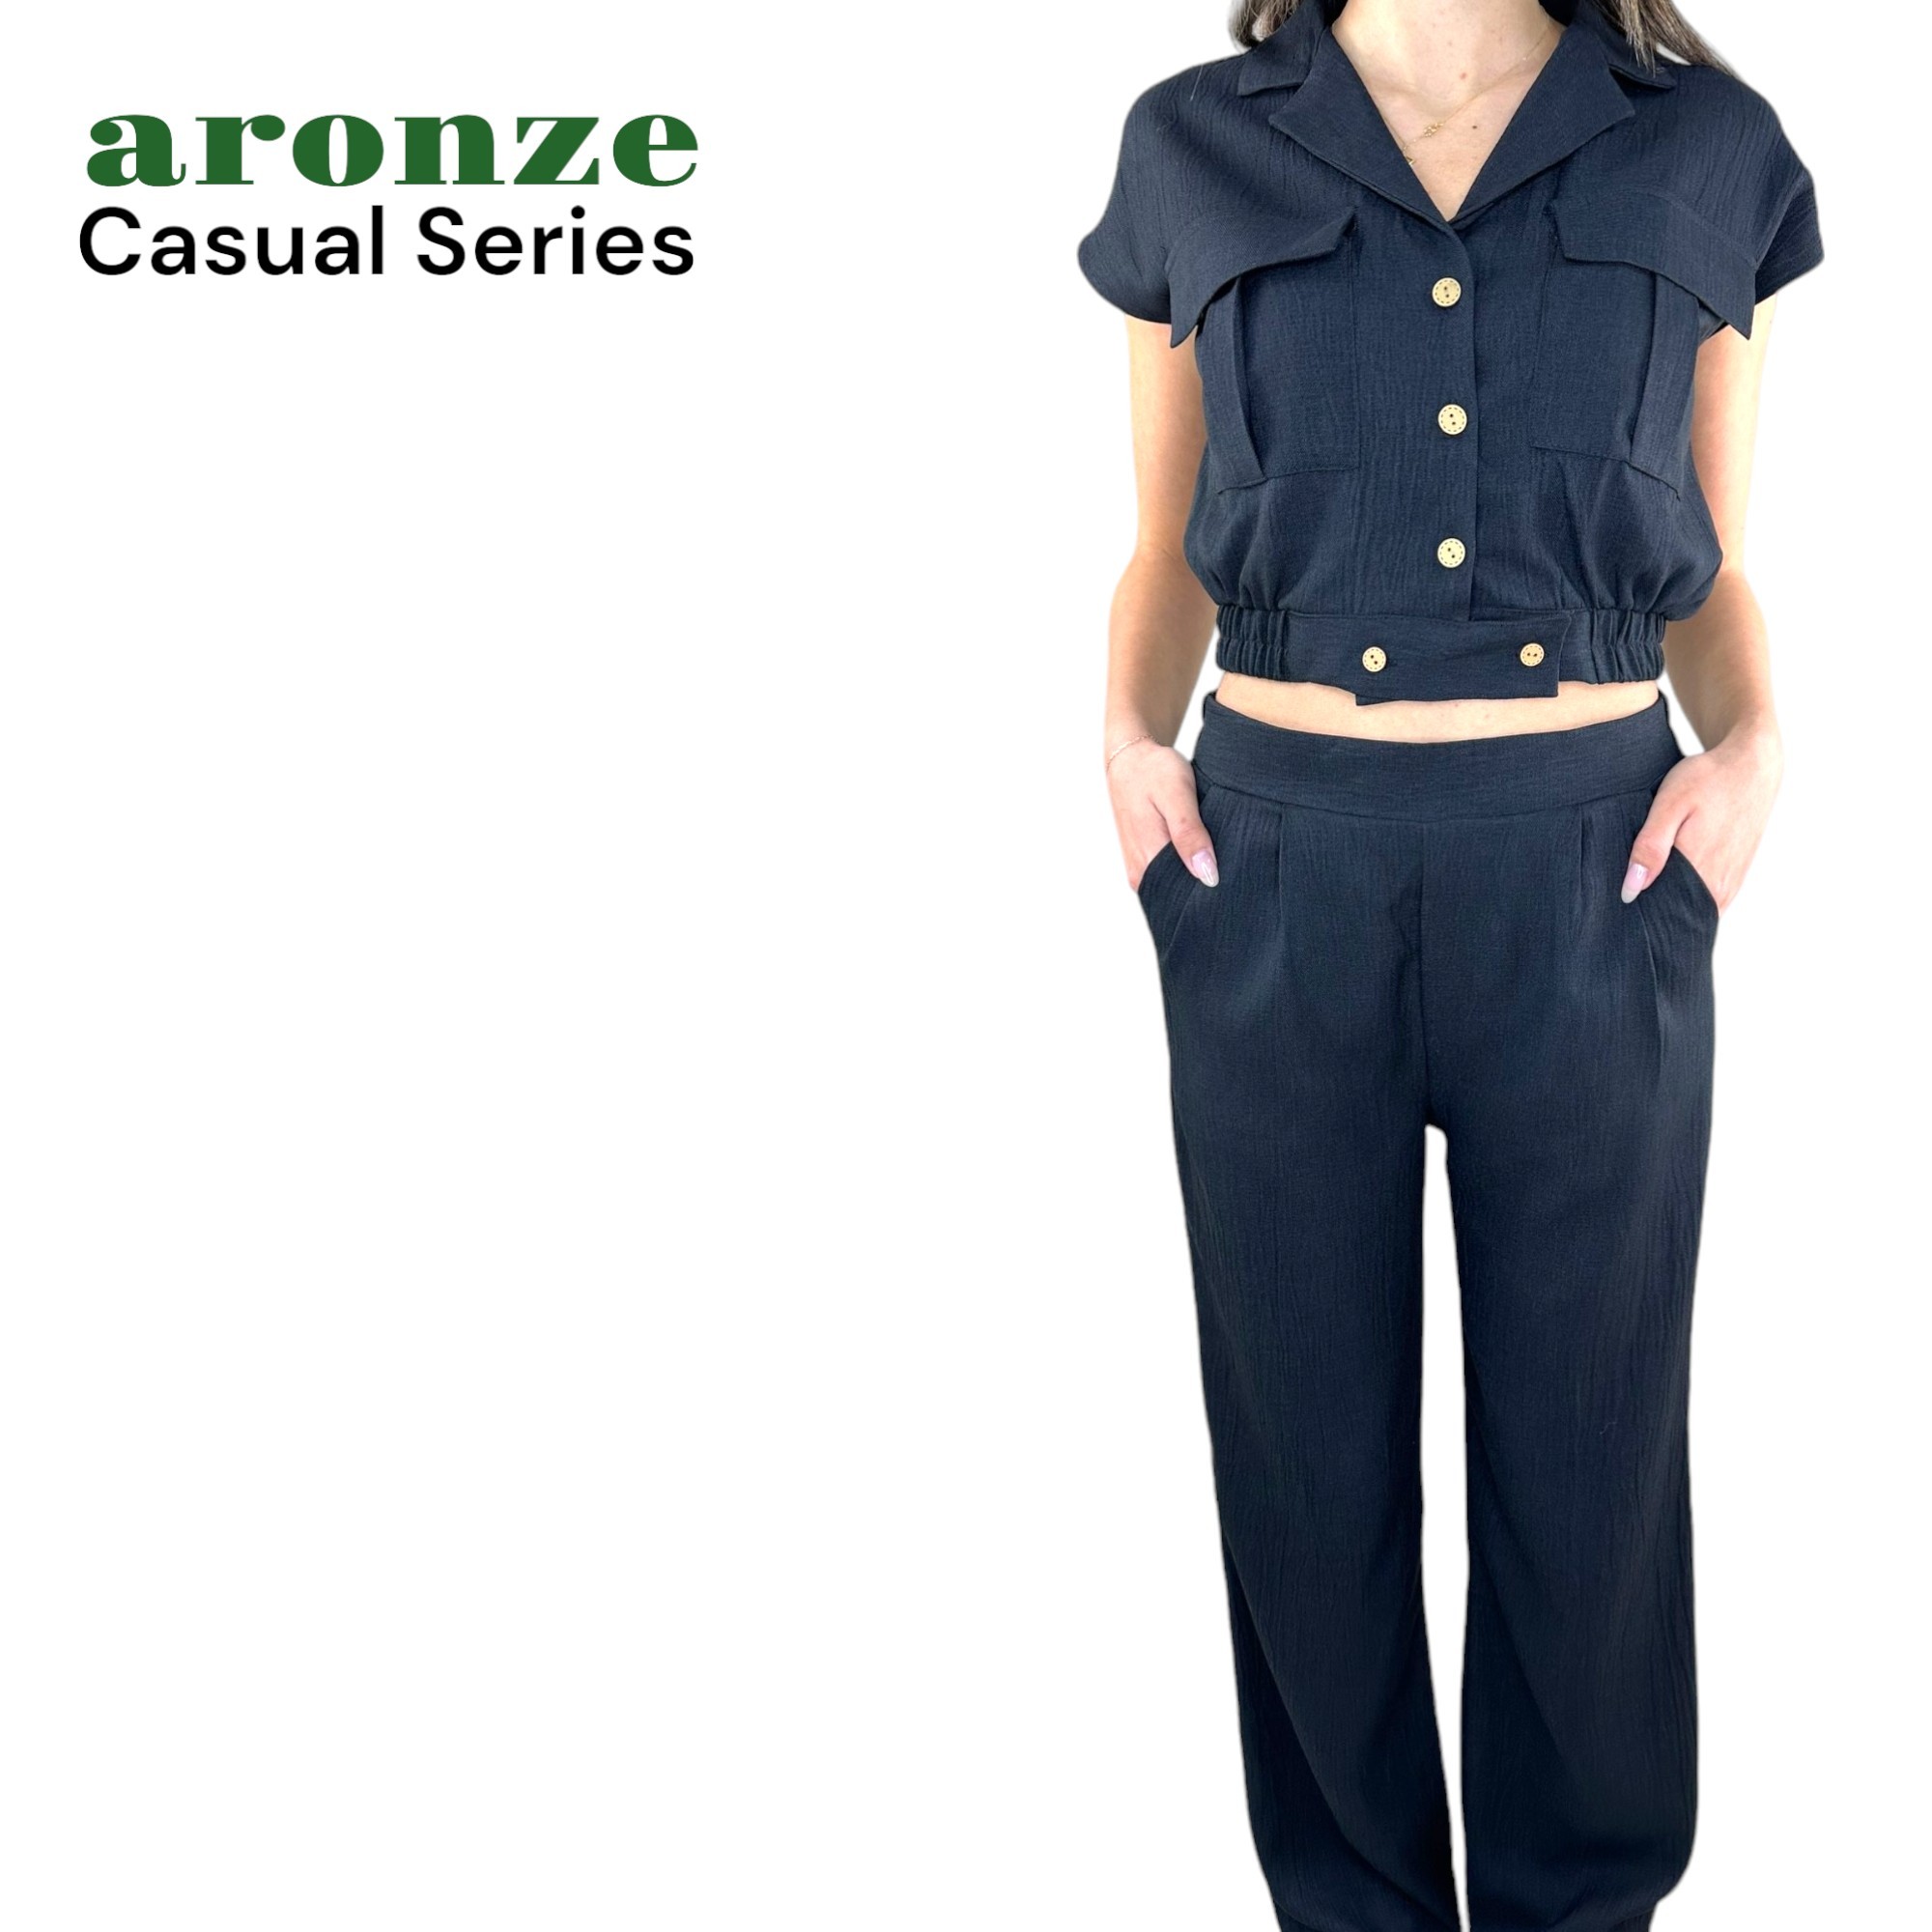 Aronze Casual Series %100 Organik Türk Pamuğu Crop Pantolon Siyah Renk Takım